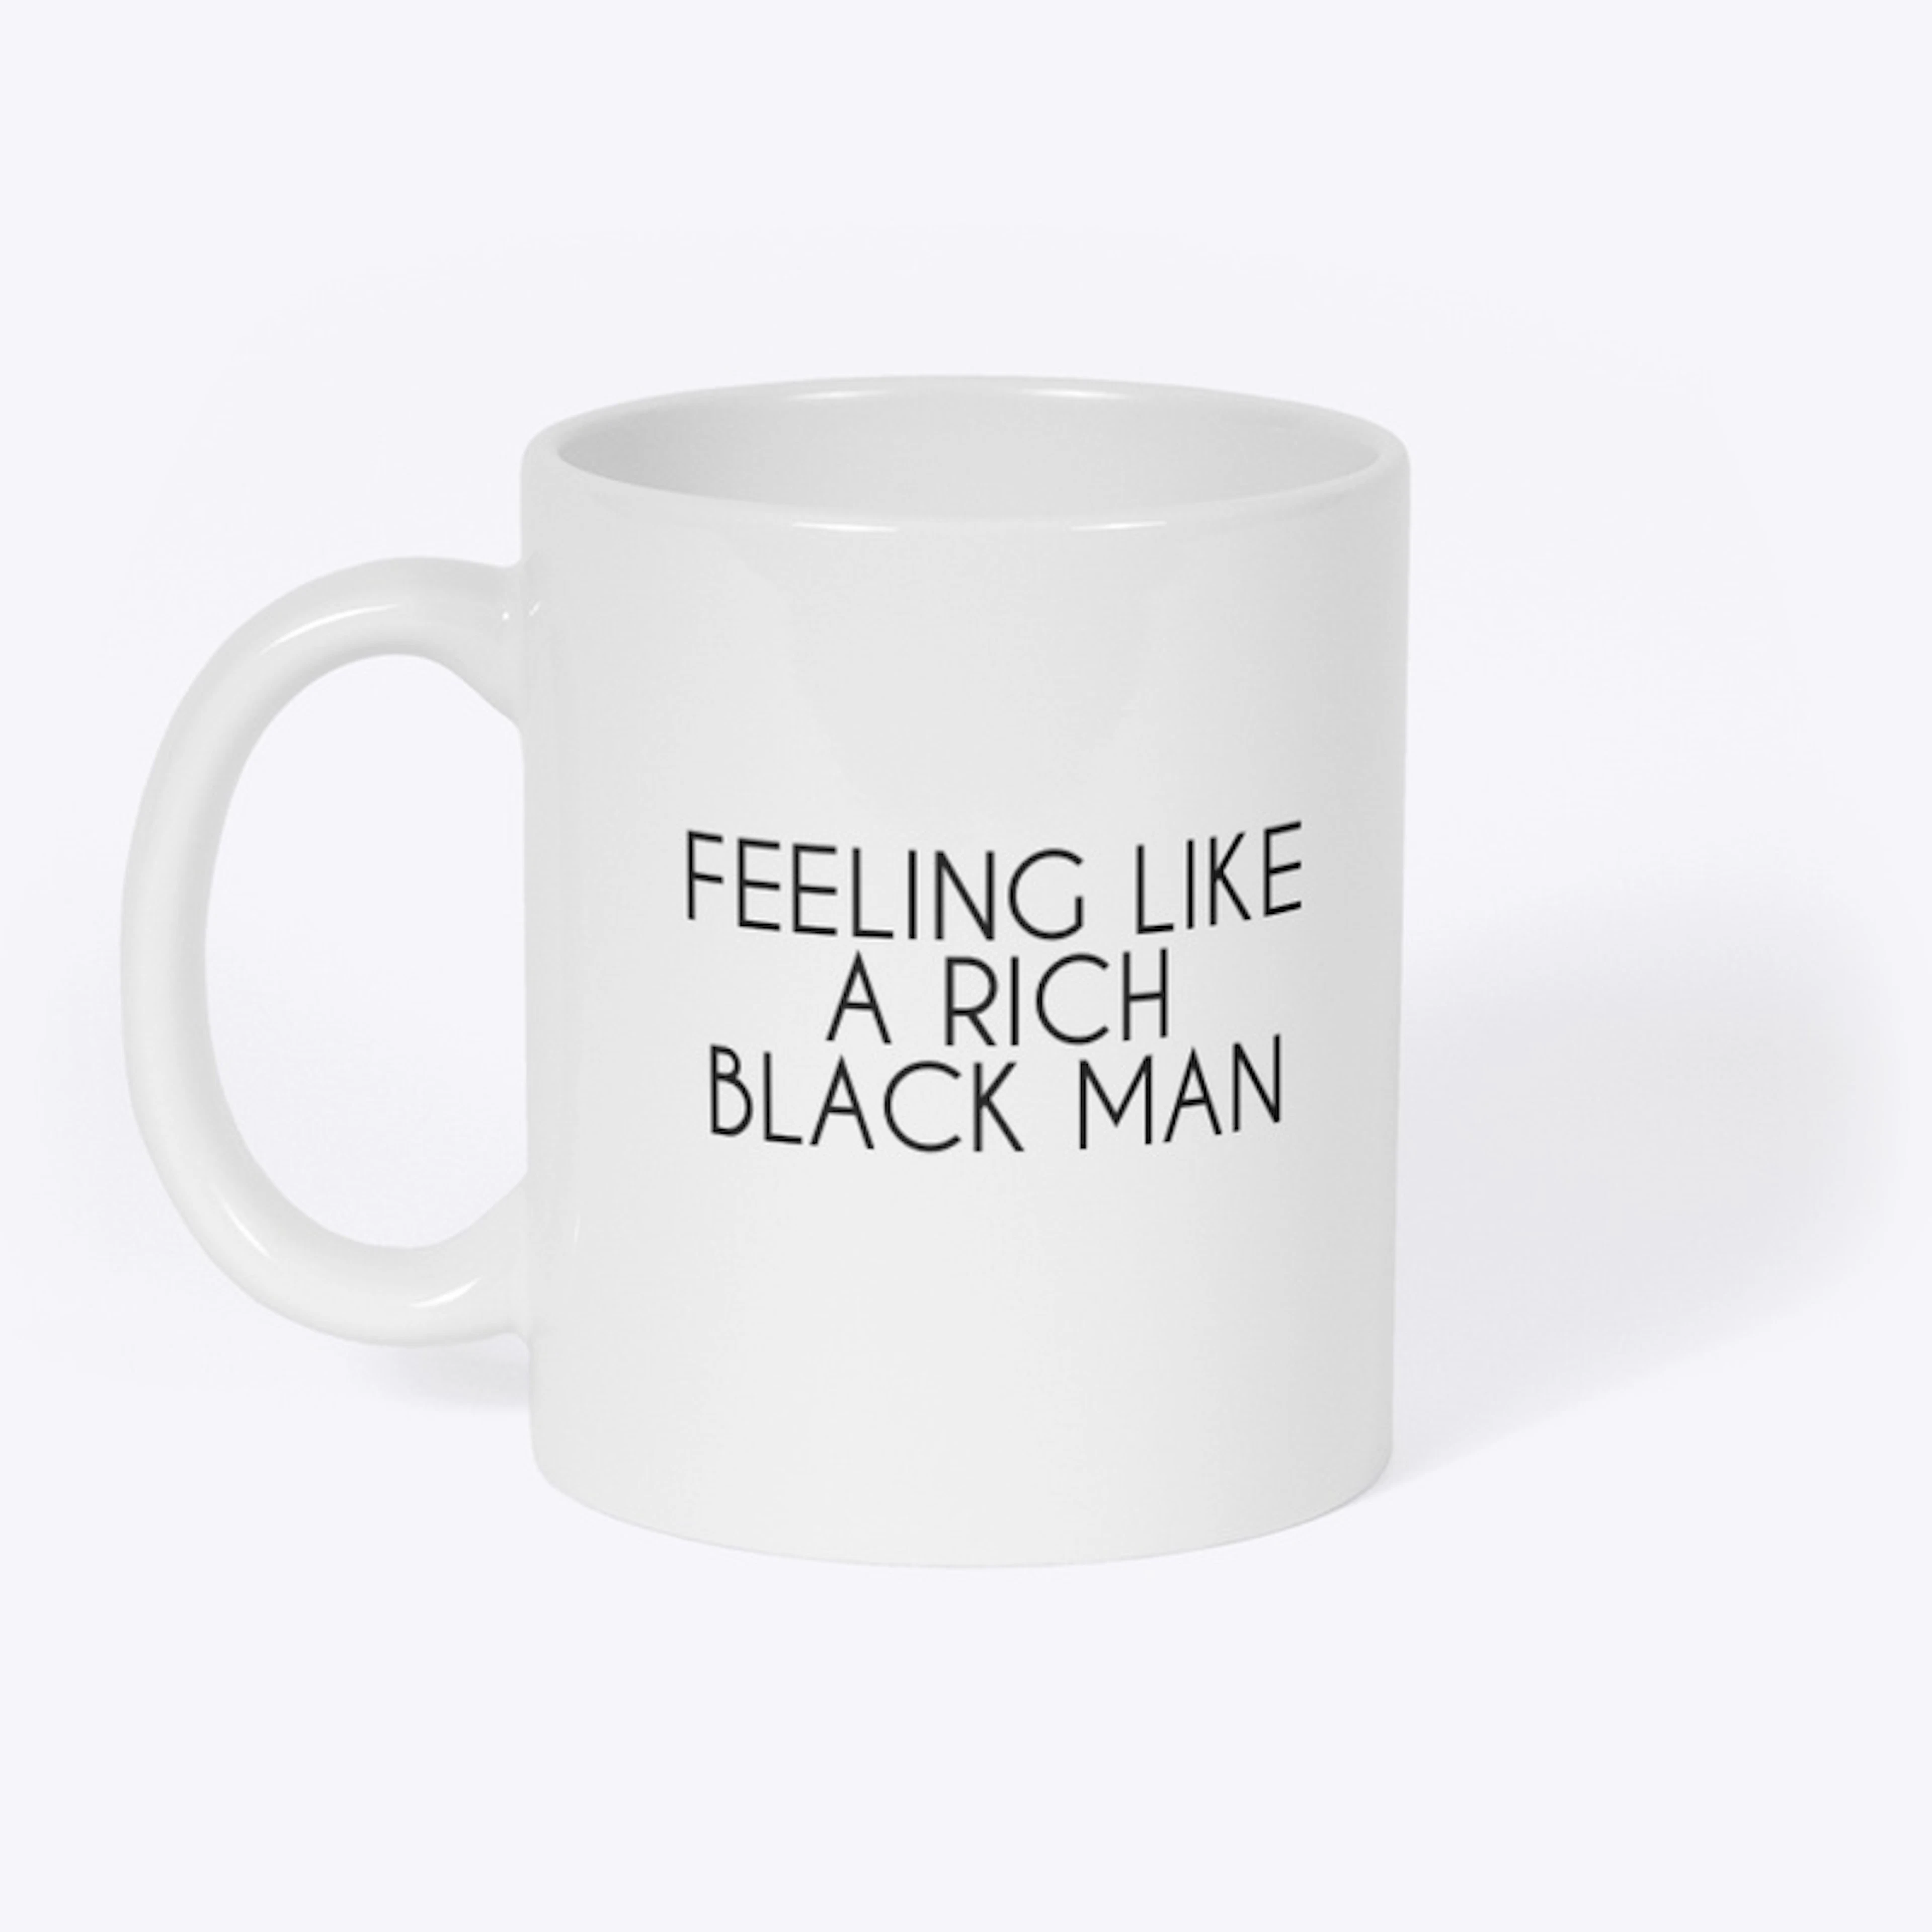 FEELING LIKE A RICH BLACK MAN